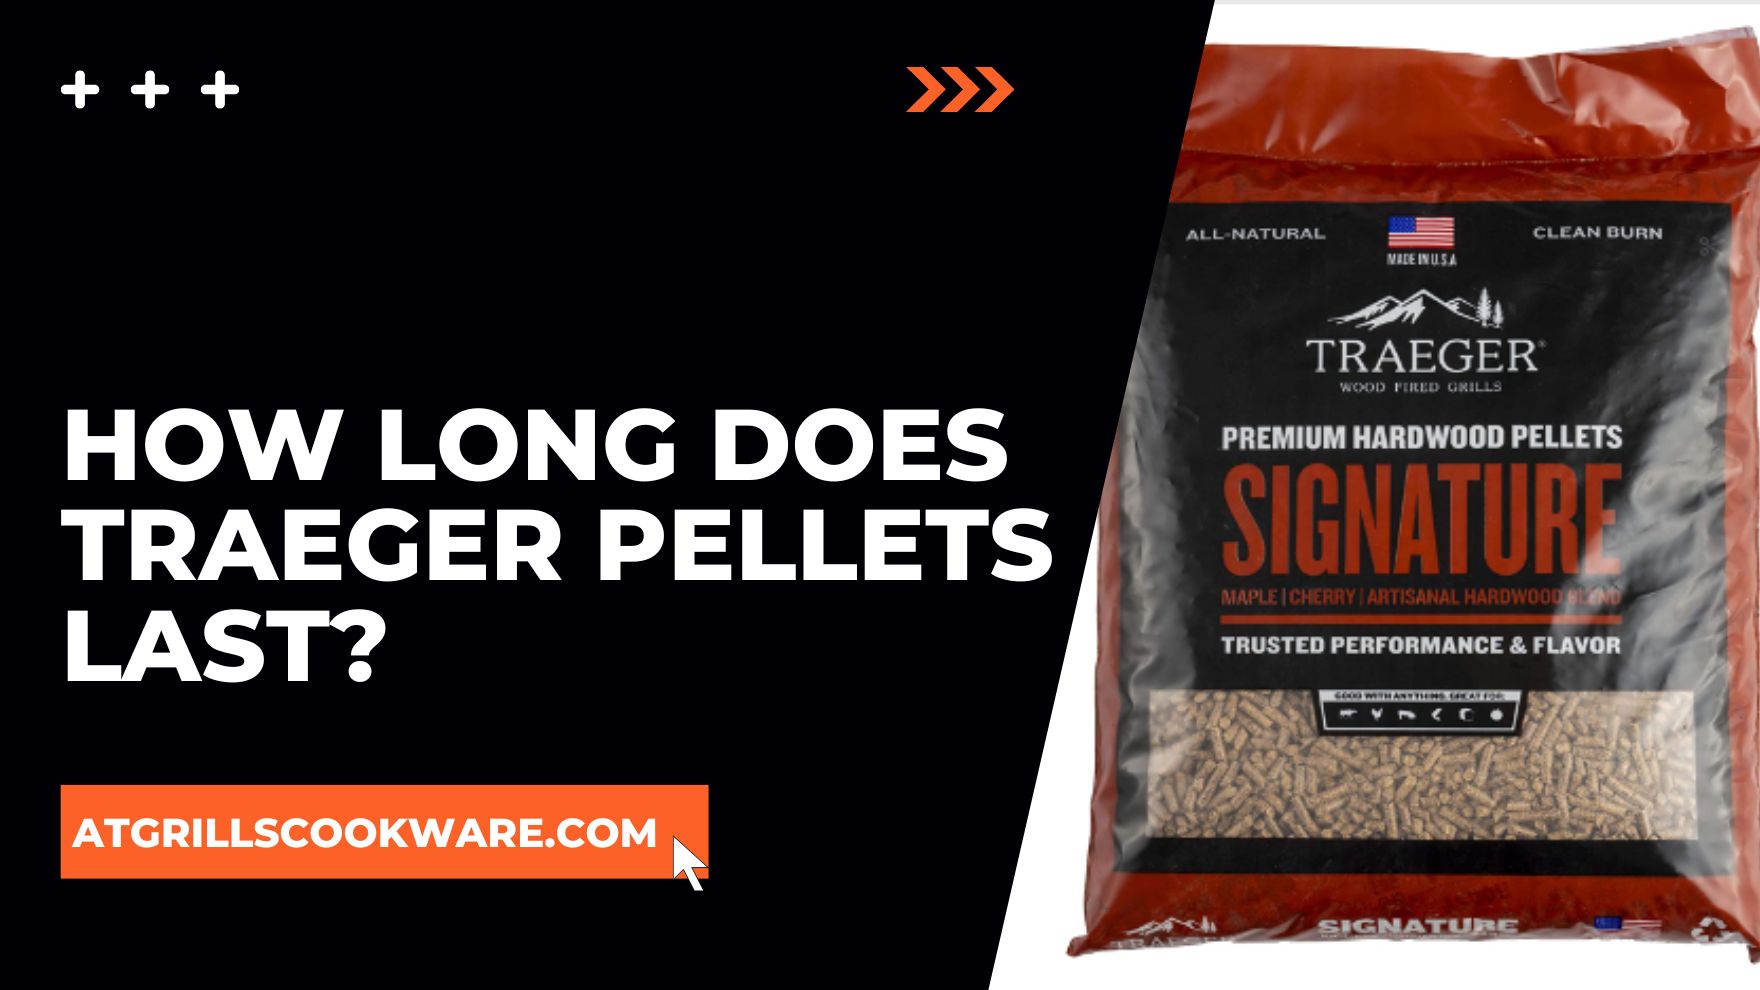 How long does traeger pellets last